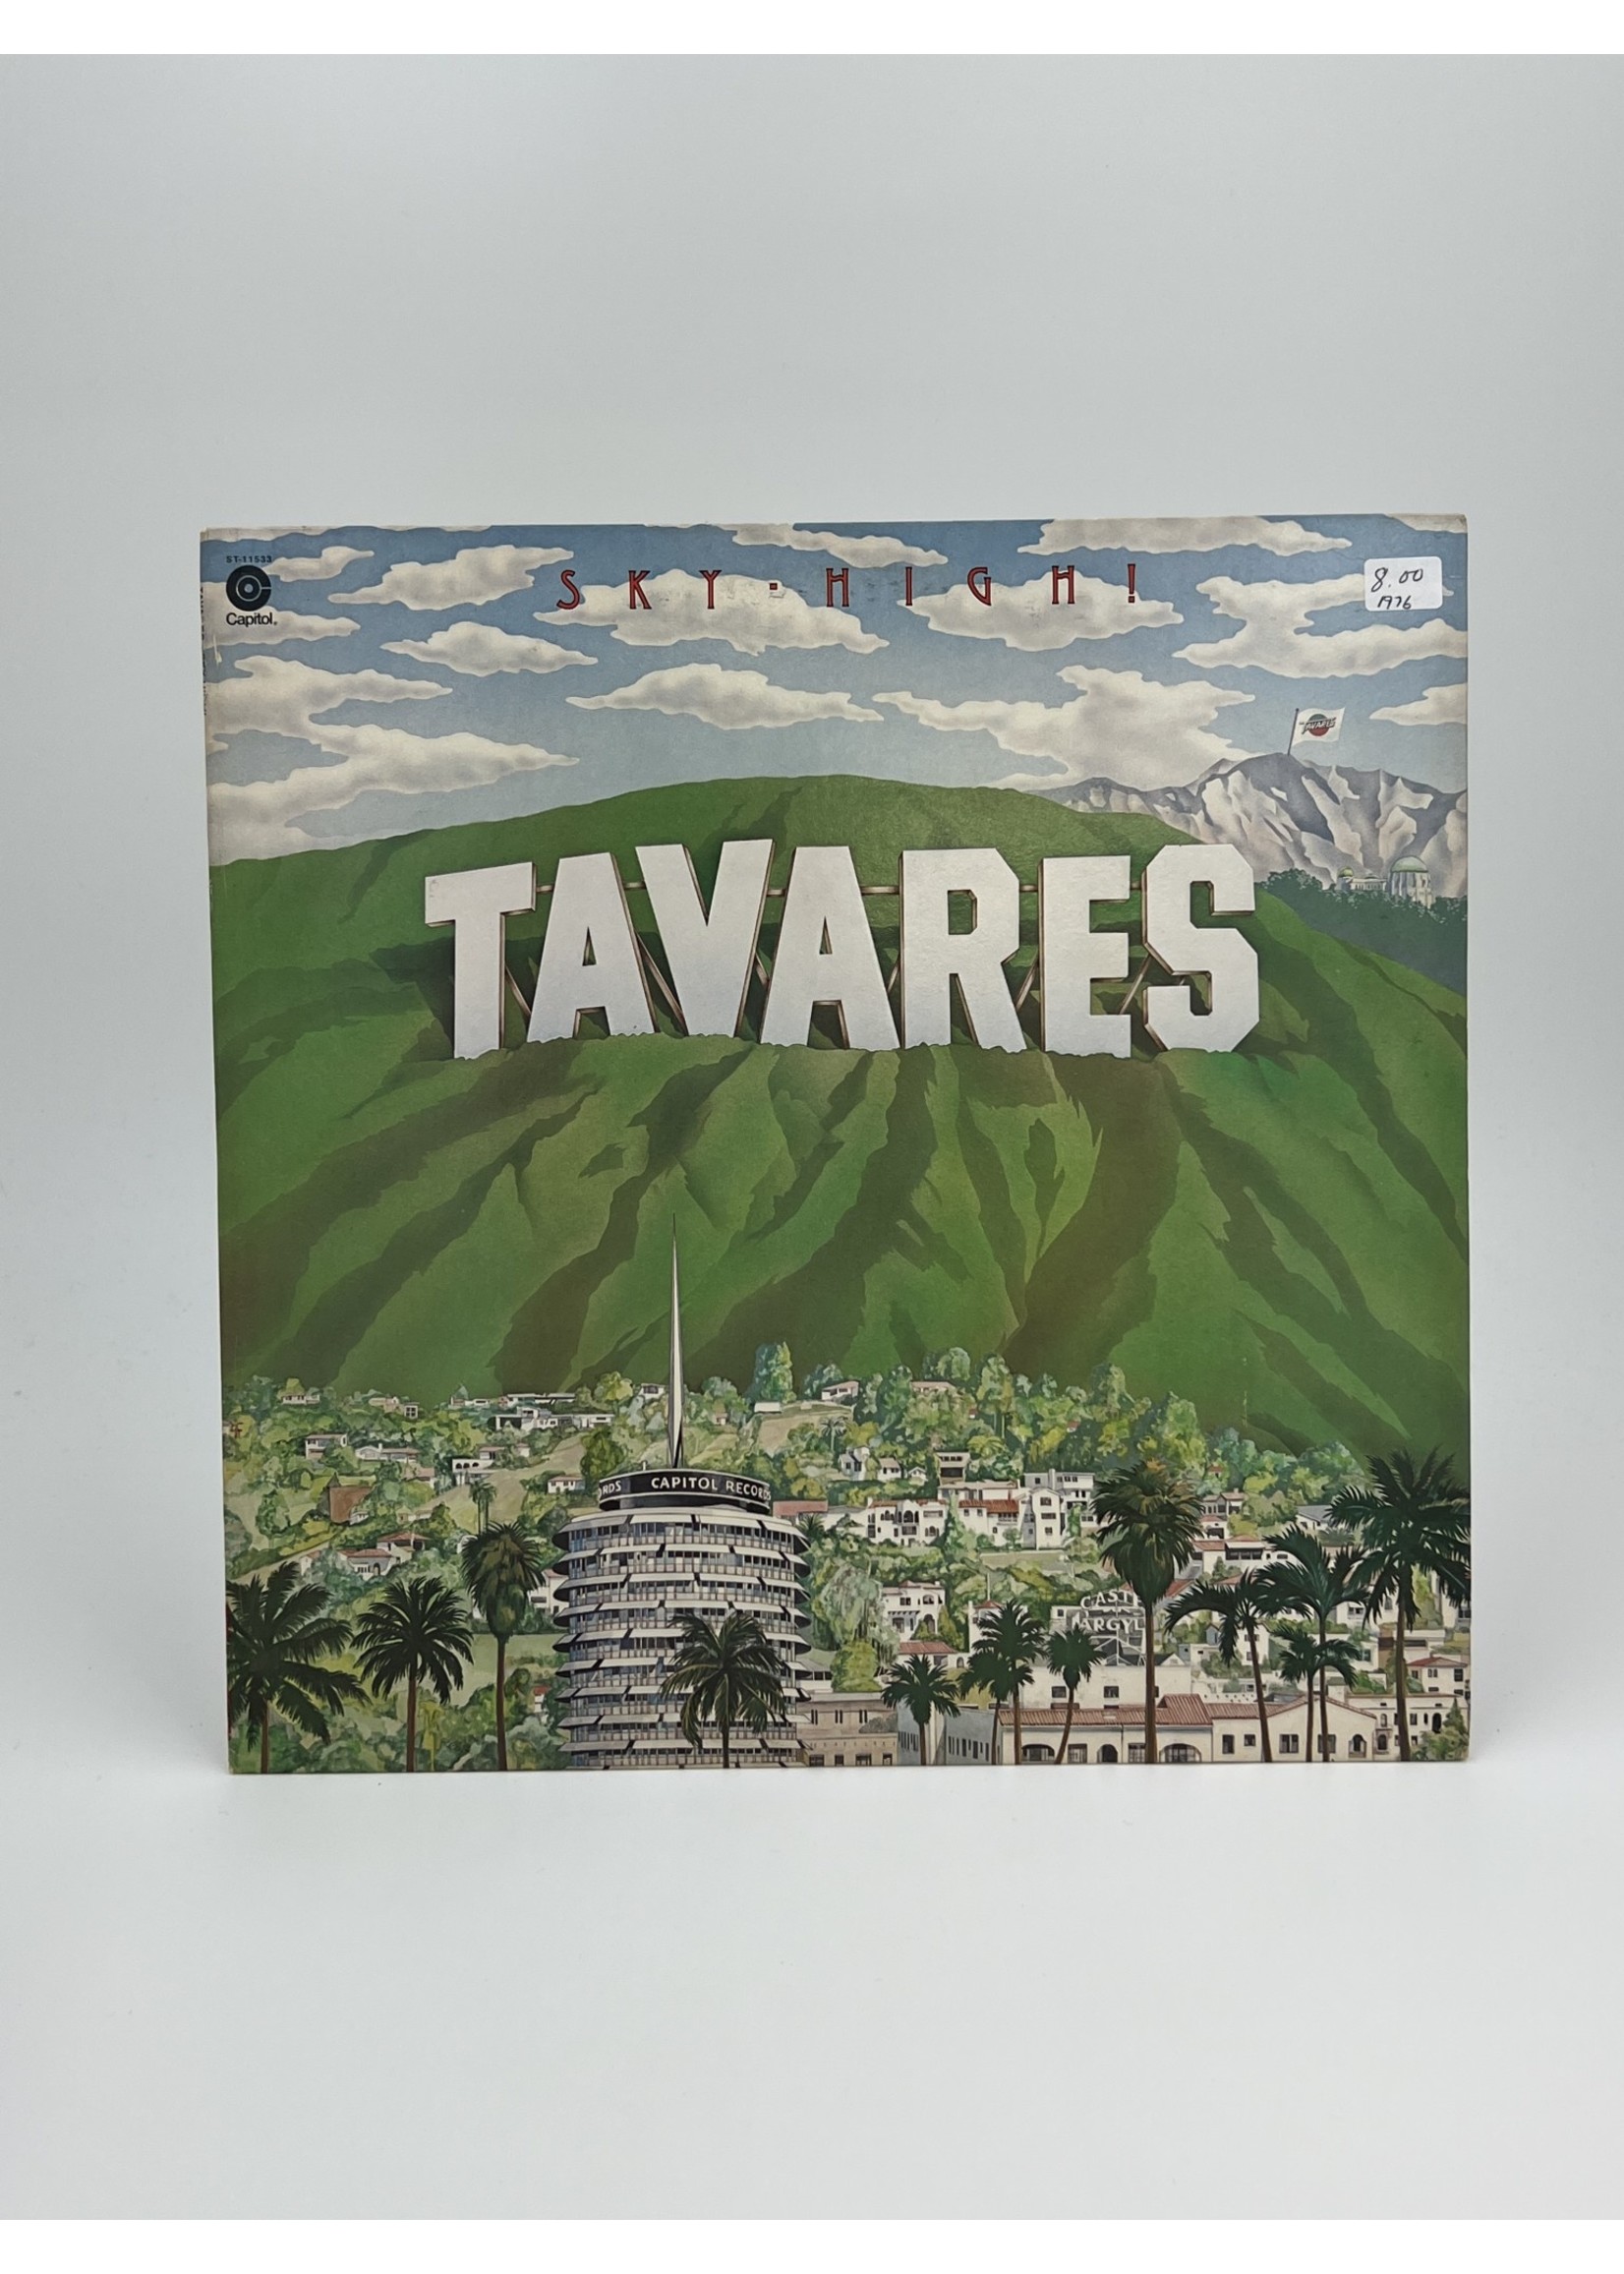 LP Tavares Sky High LP Record